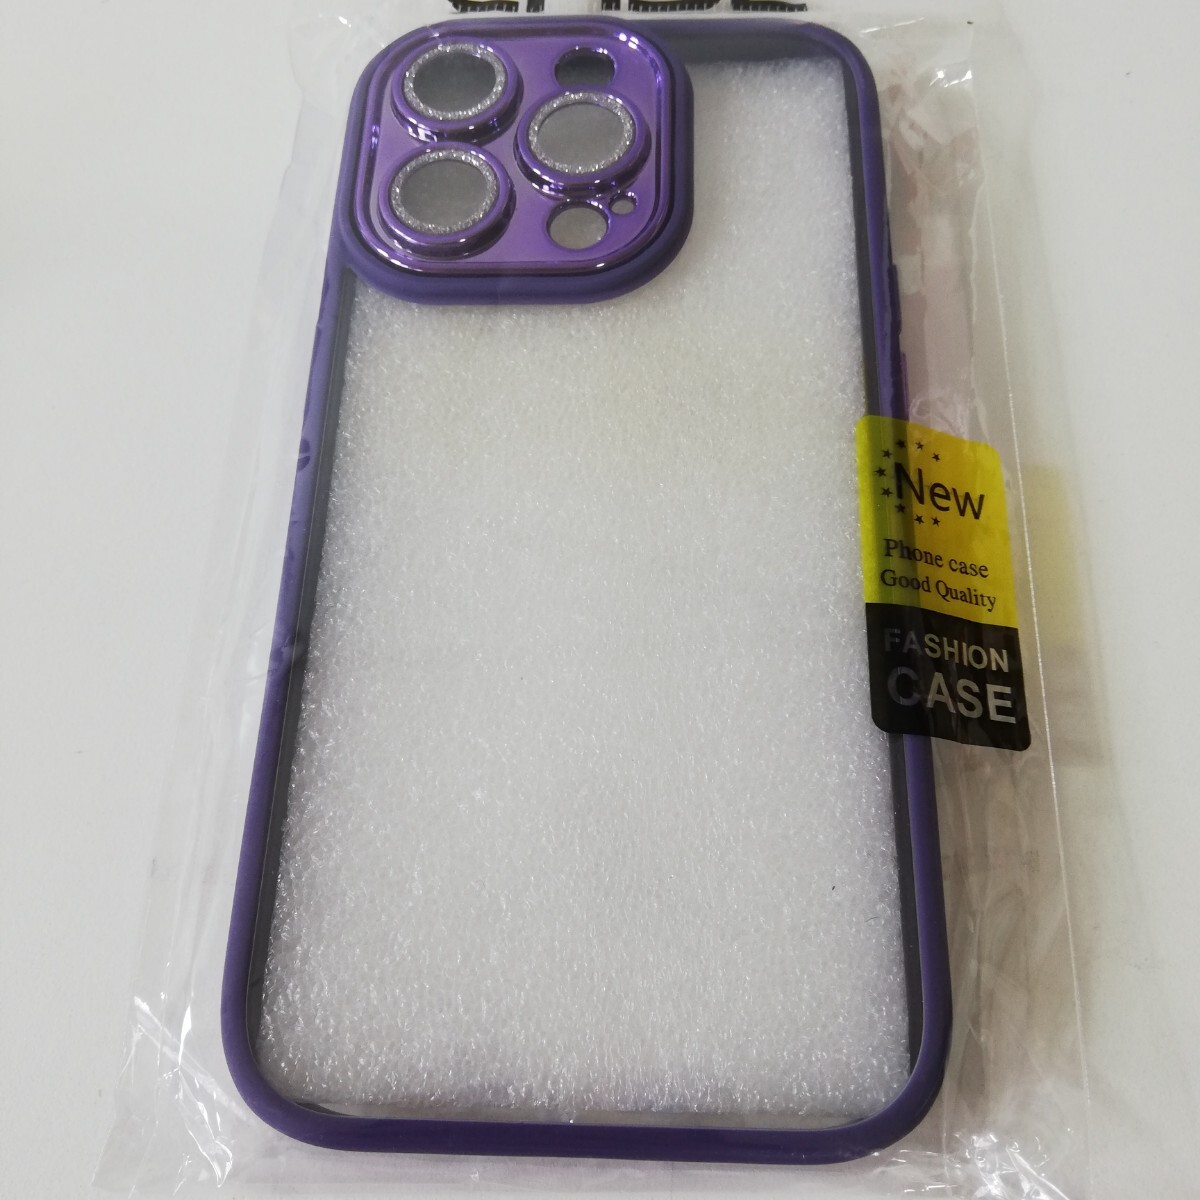 FASHION CASE iPhone ケース 紫 パープル ラメ入り 未使用品 _画像3